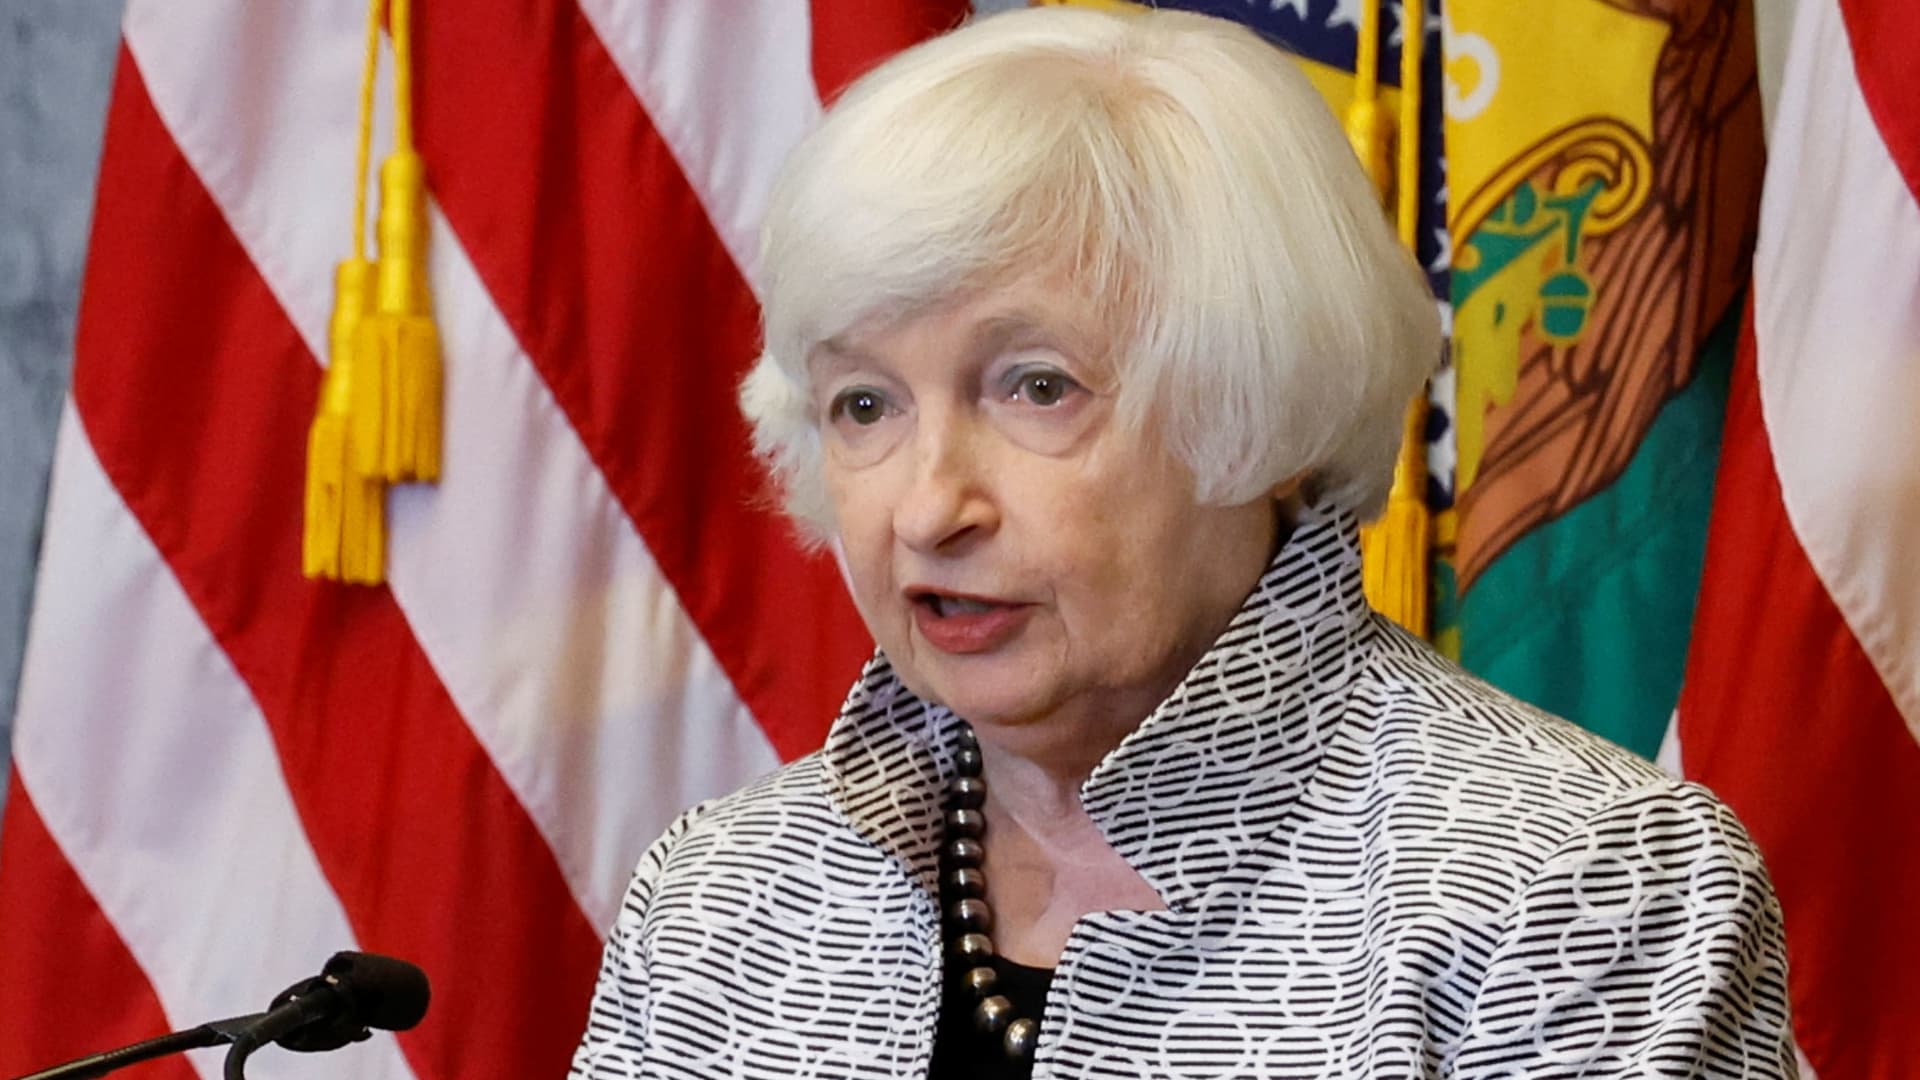 Yellen says Treasury is taking extraordinary measures to avoid default as U.S. hits debt limit